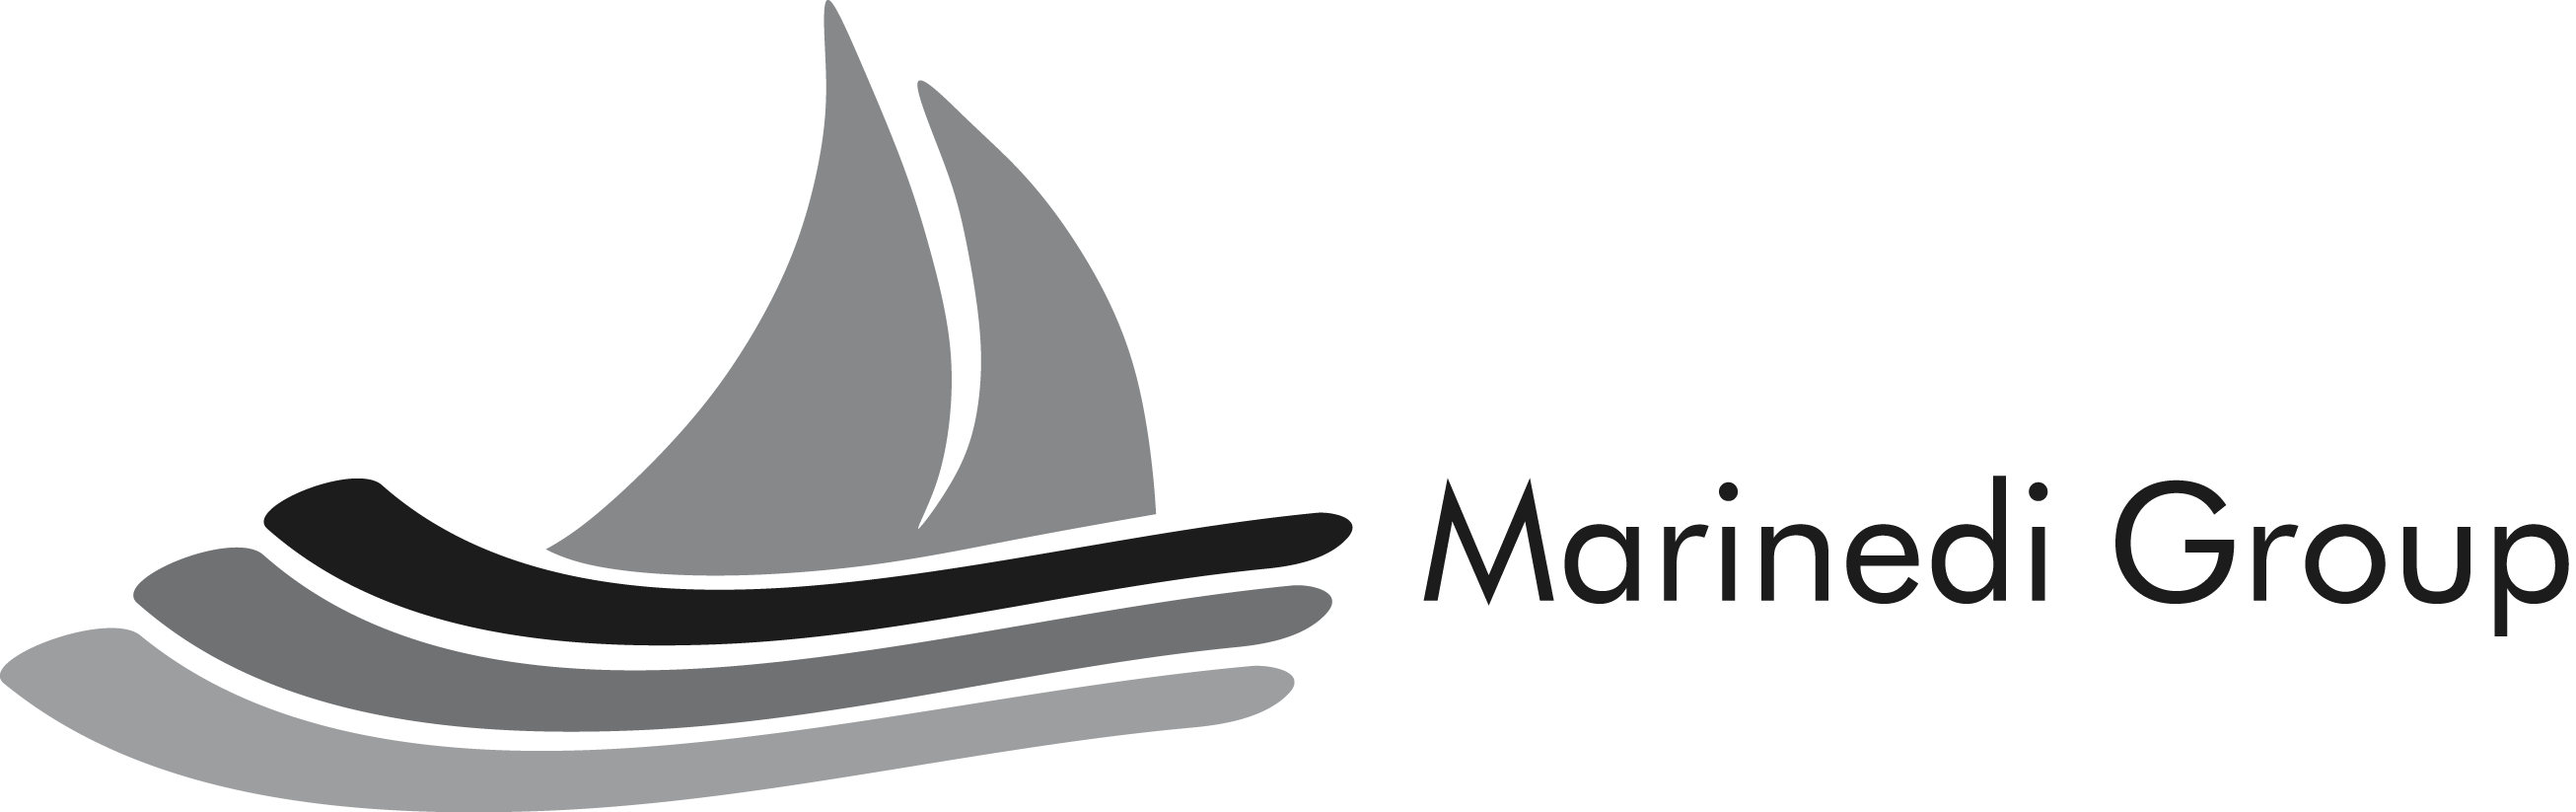 MARINEDI - The leading and expanding mediterranean marina network